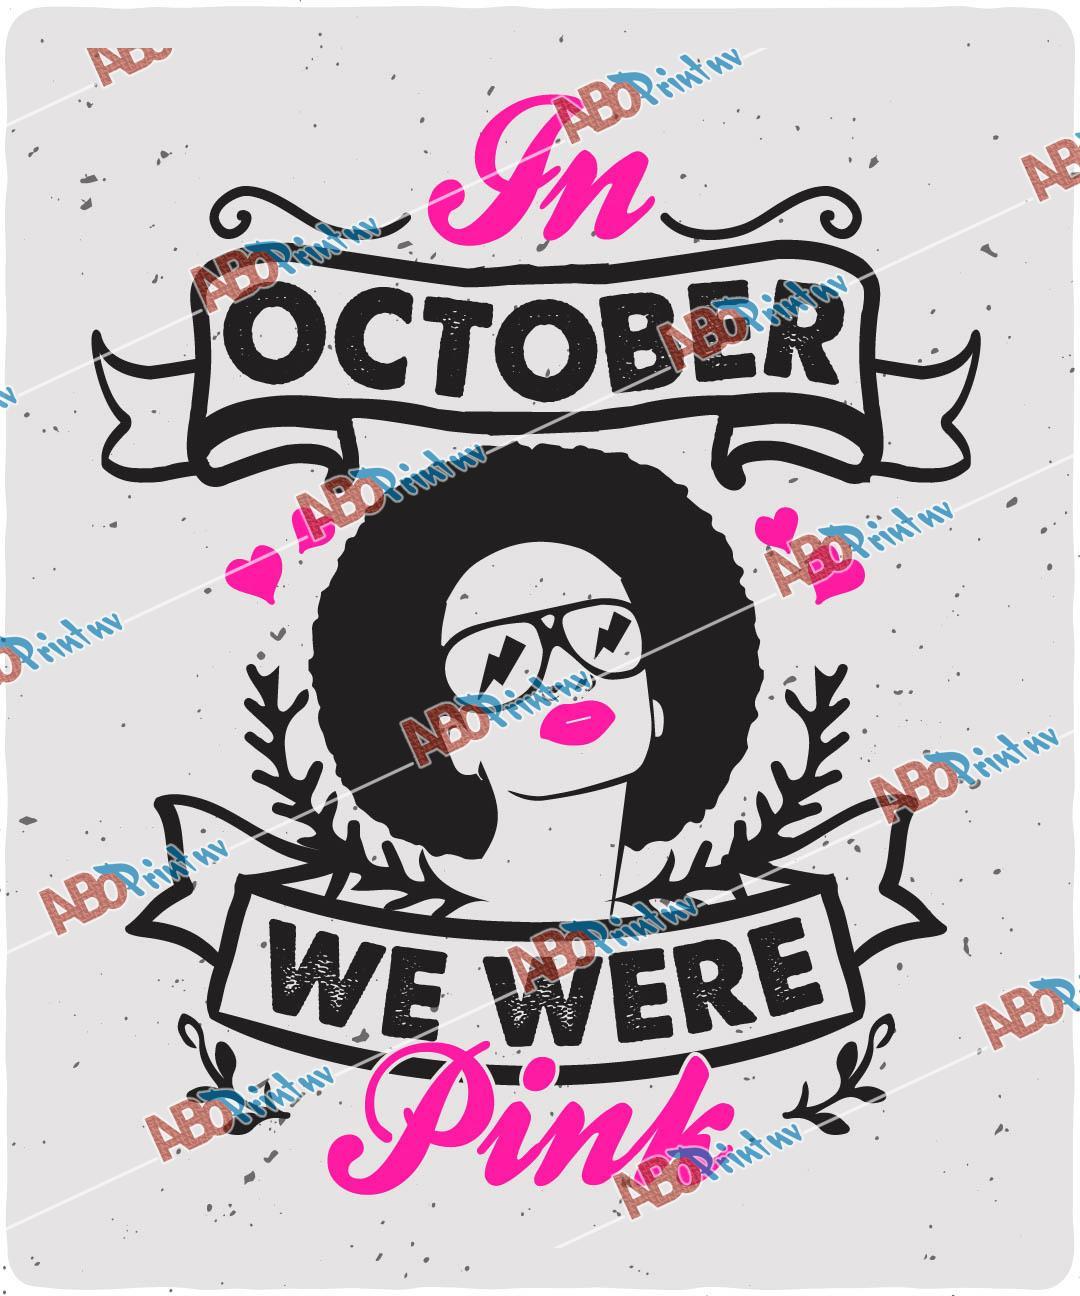 In October we were pink.jpg